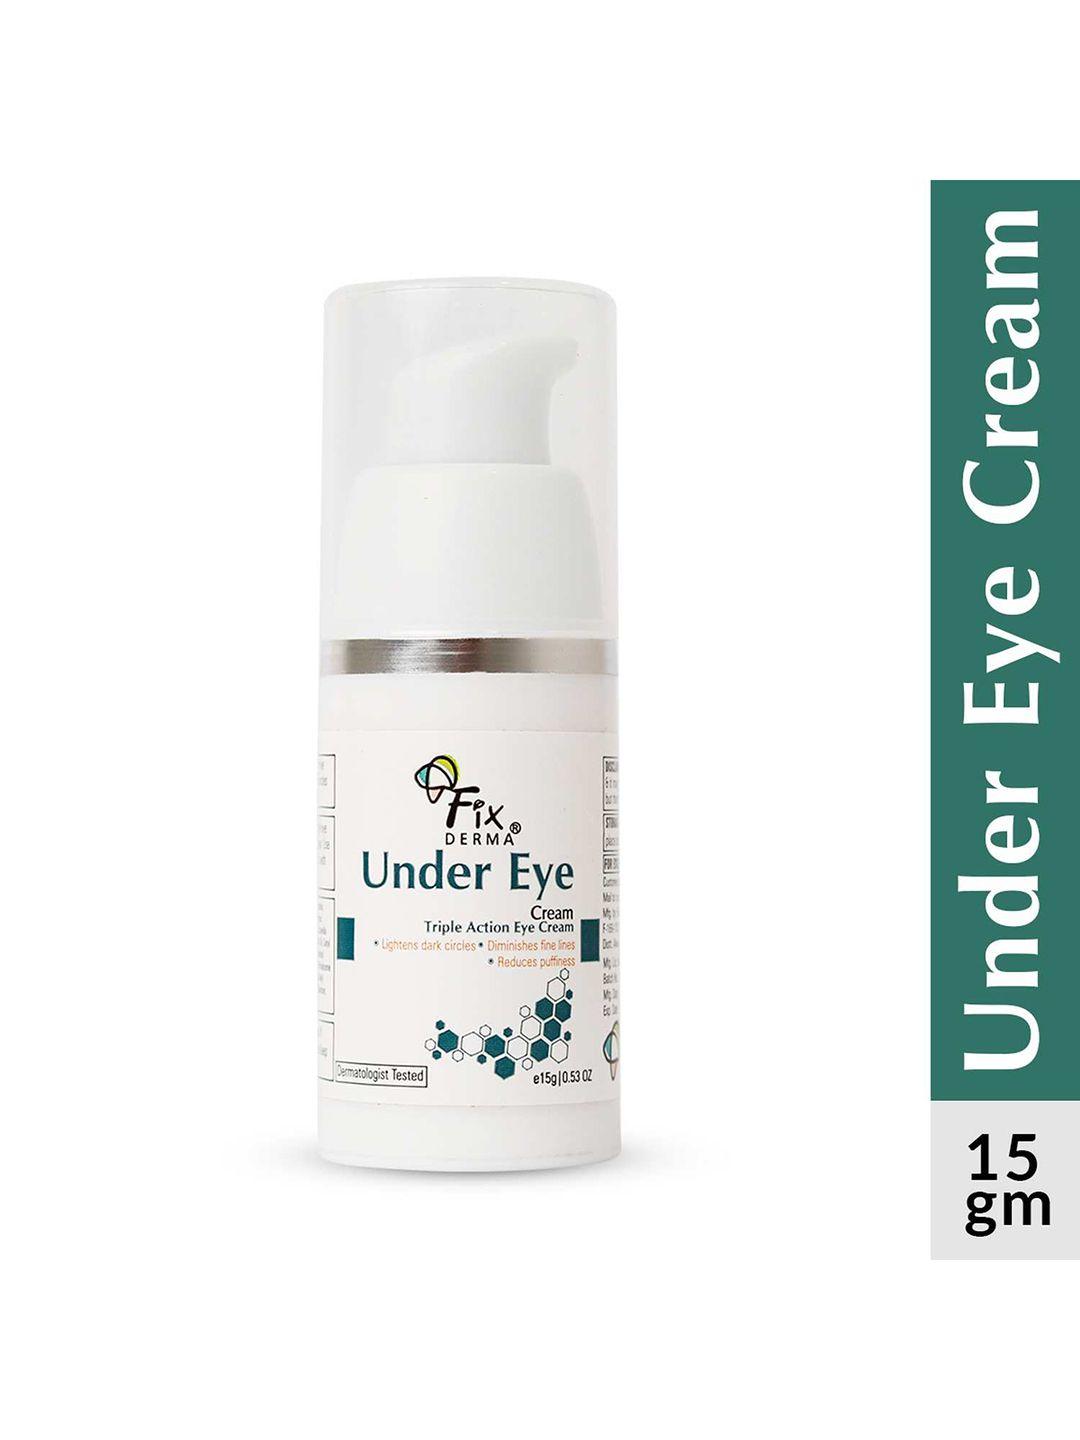 fixderma under eye cream for dark circles & puffiness - 15g